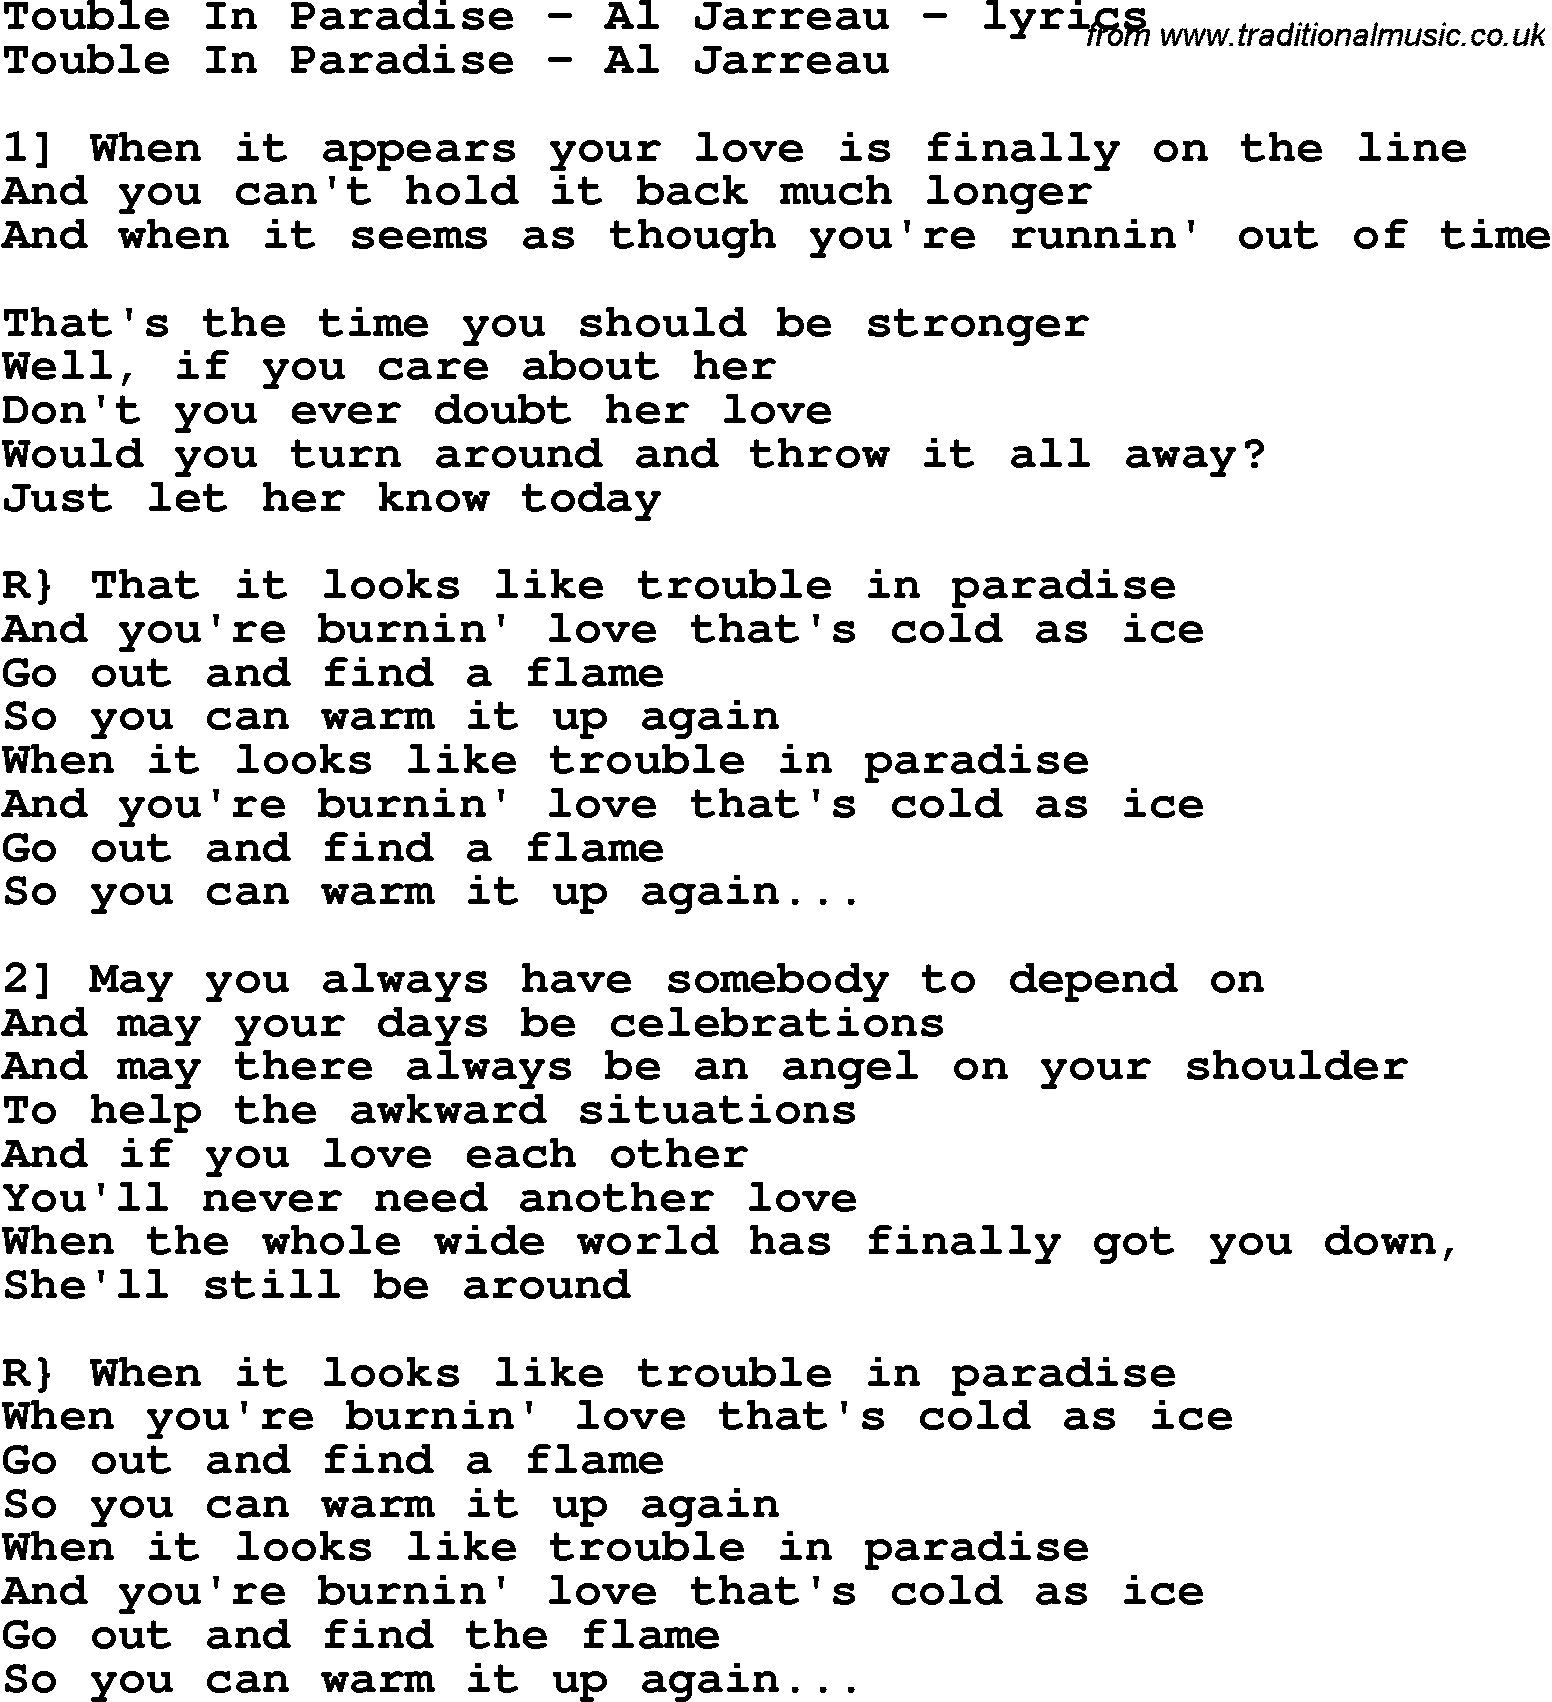 Love Song Lyrics for: Touble In Paradise - Al Jarreau